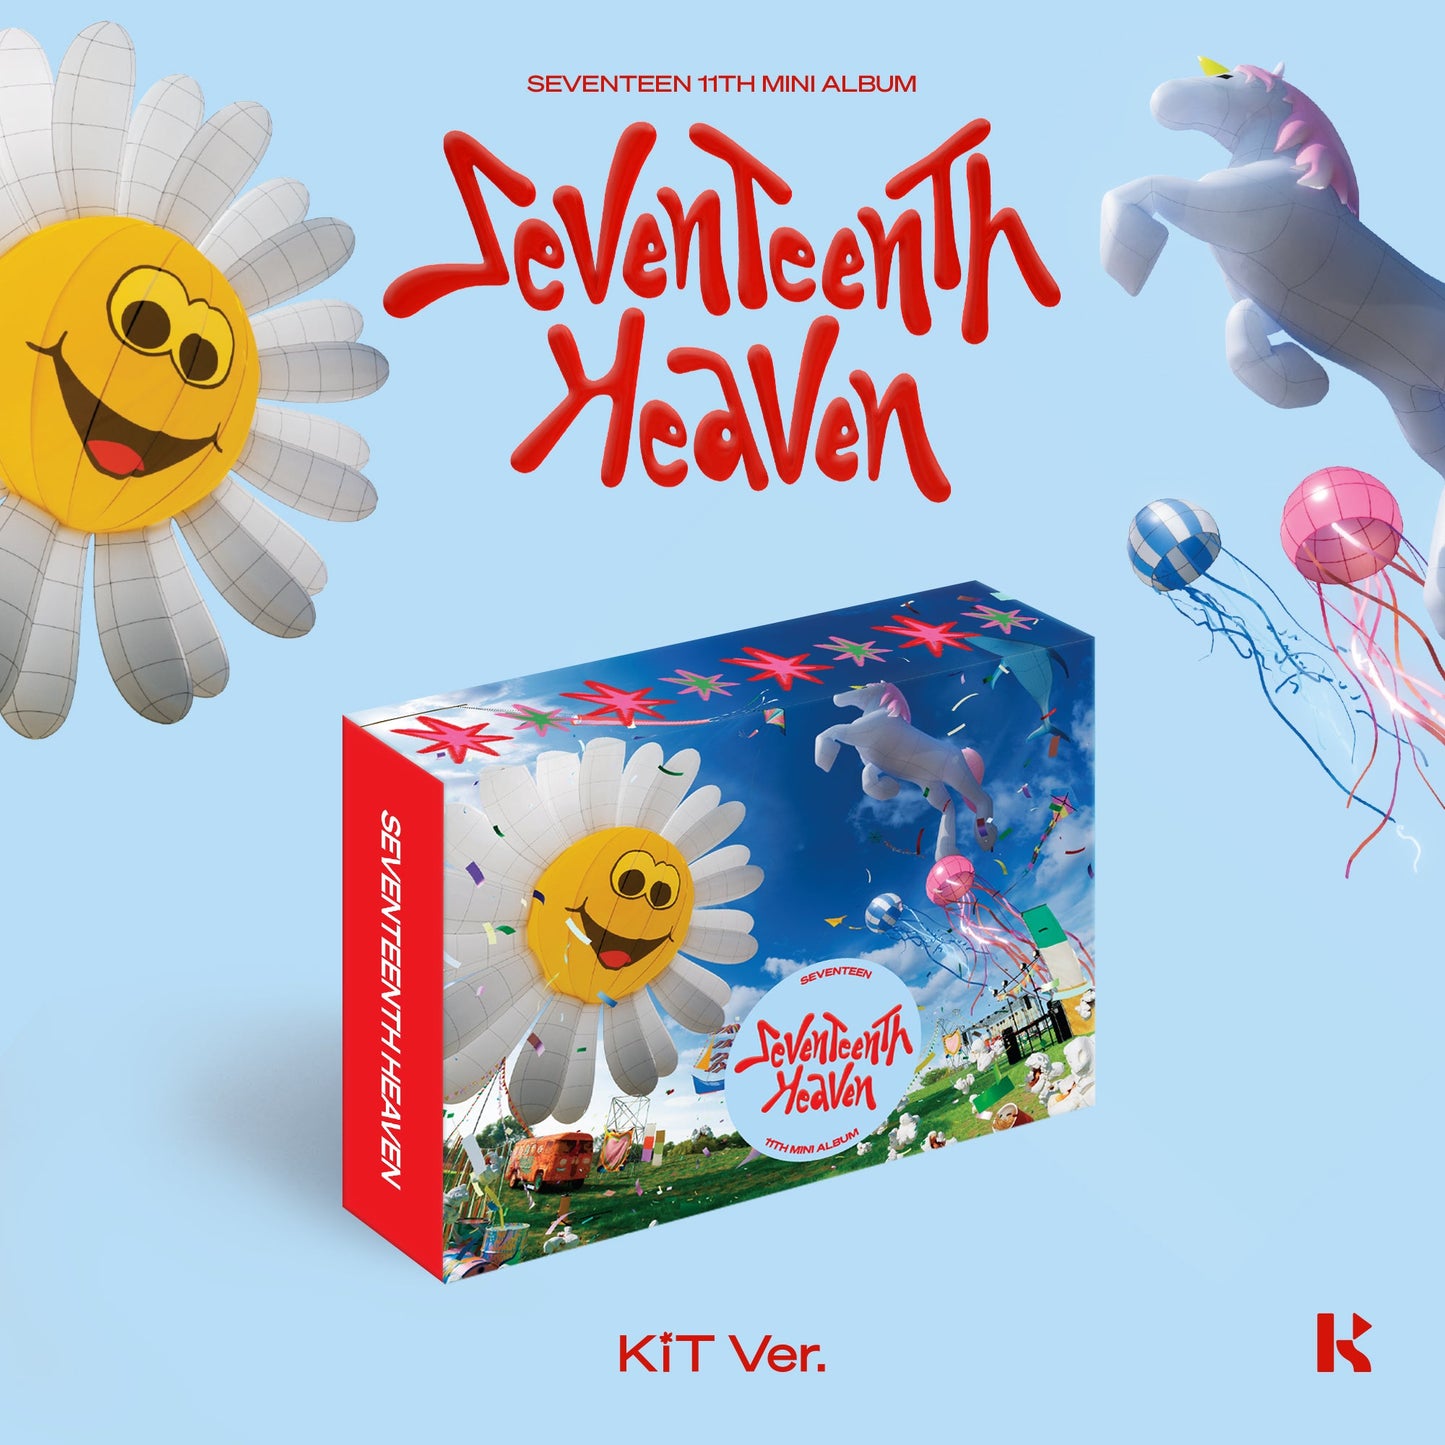 SEVENTEEN 11TH MINI ALBUM 'SEVENTEENTH HEAVEN' (KIHNO KIT) COVER